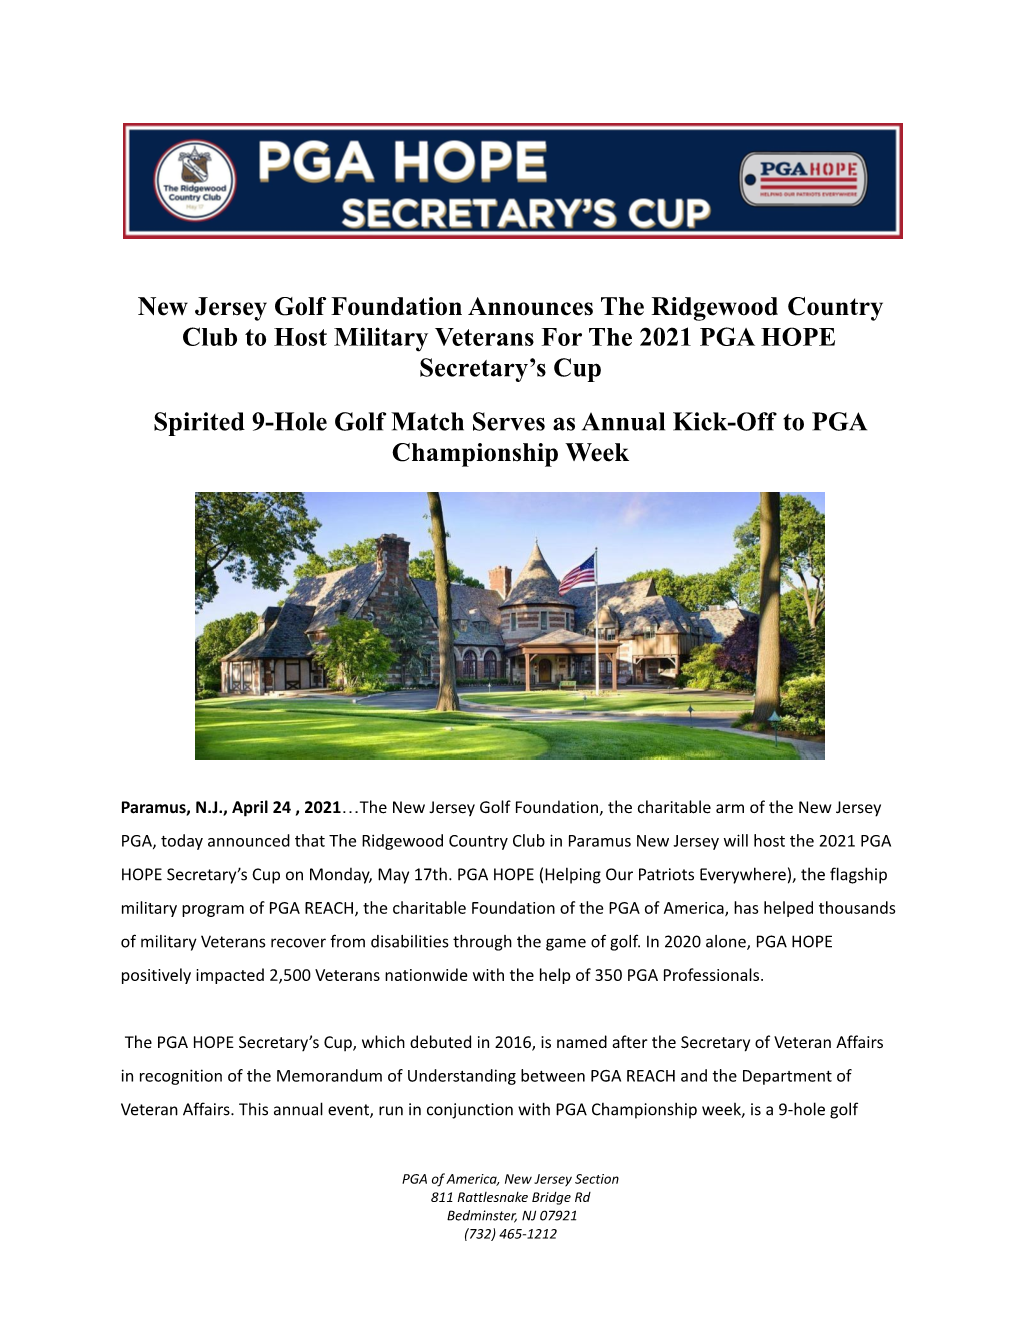 The Ridgewood Country Club to Host 2021 PGA HOPE Secretary's Cup.Docx